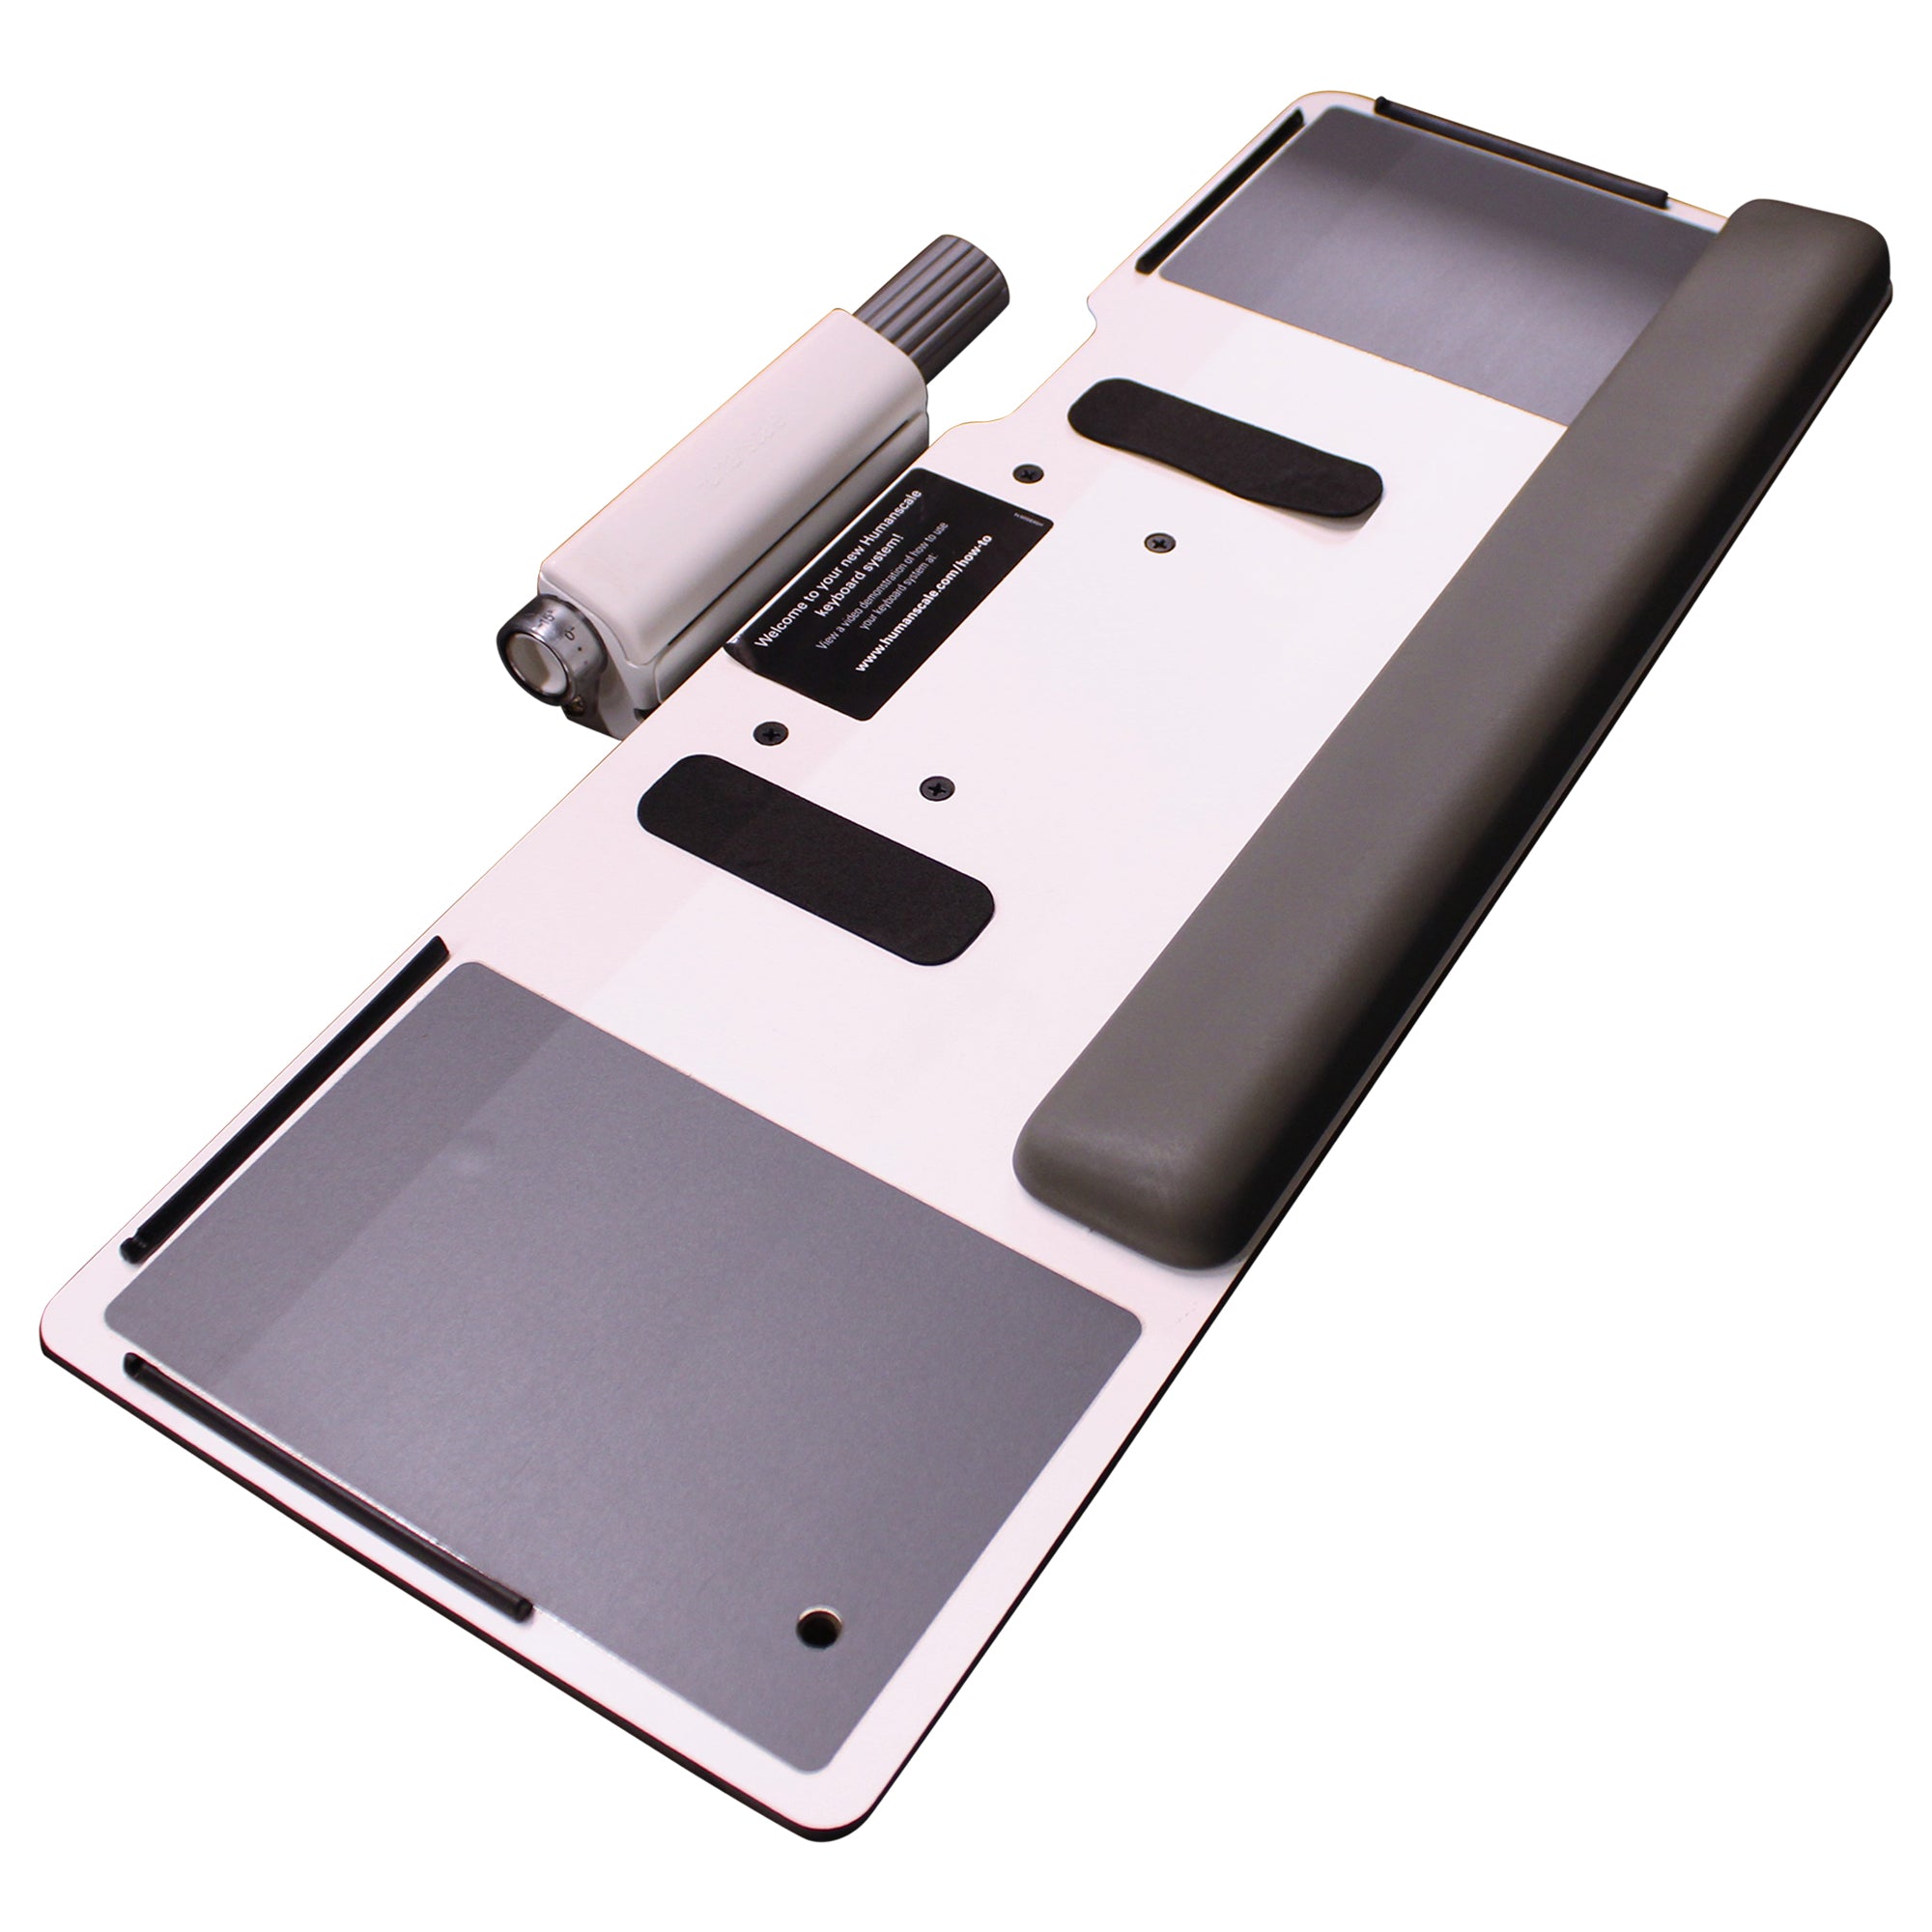 Humanscale 6G Platform Keyboard Tray, White - New CLOSEOUT